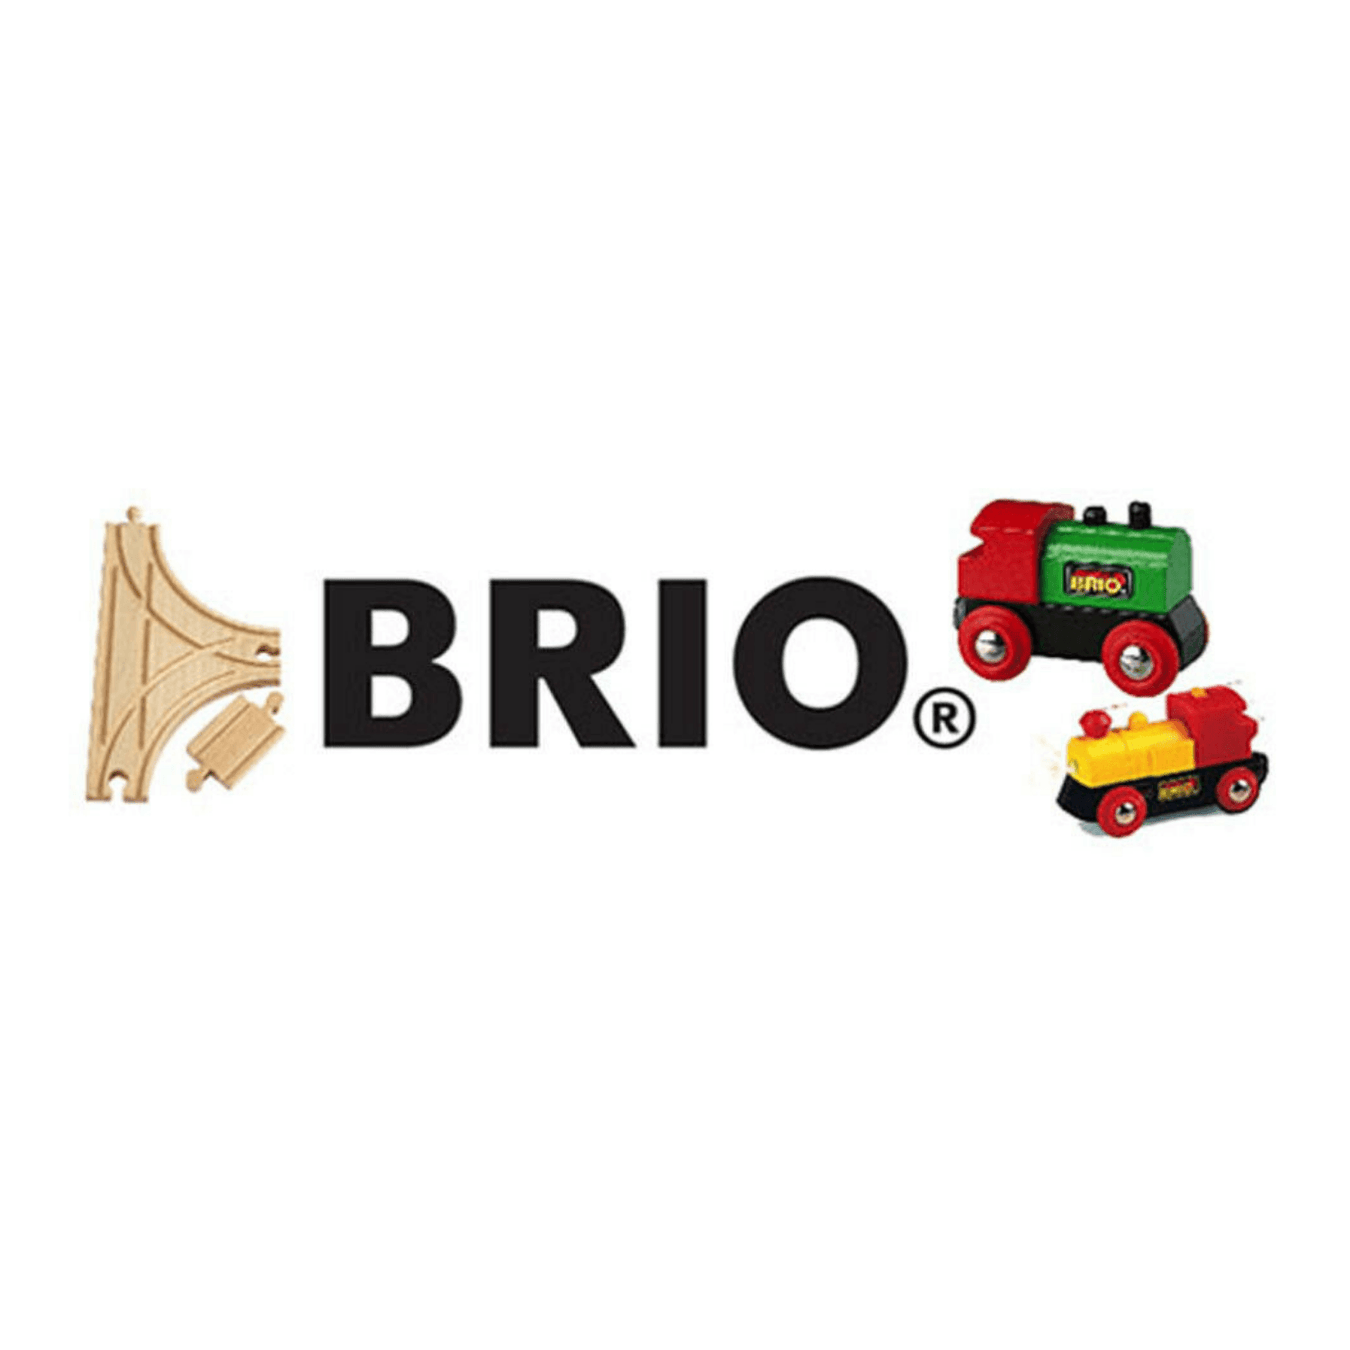 BRIO Transport Sweden - My Playroom 